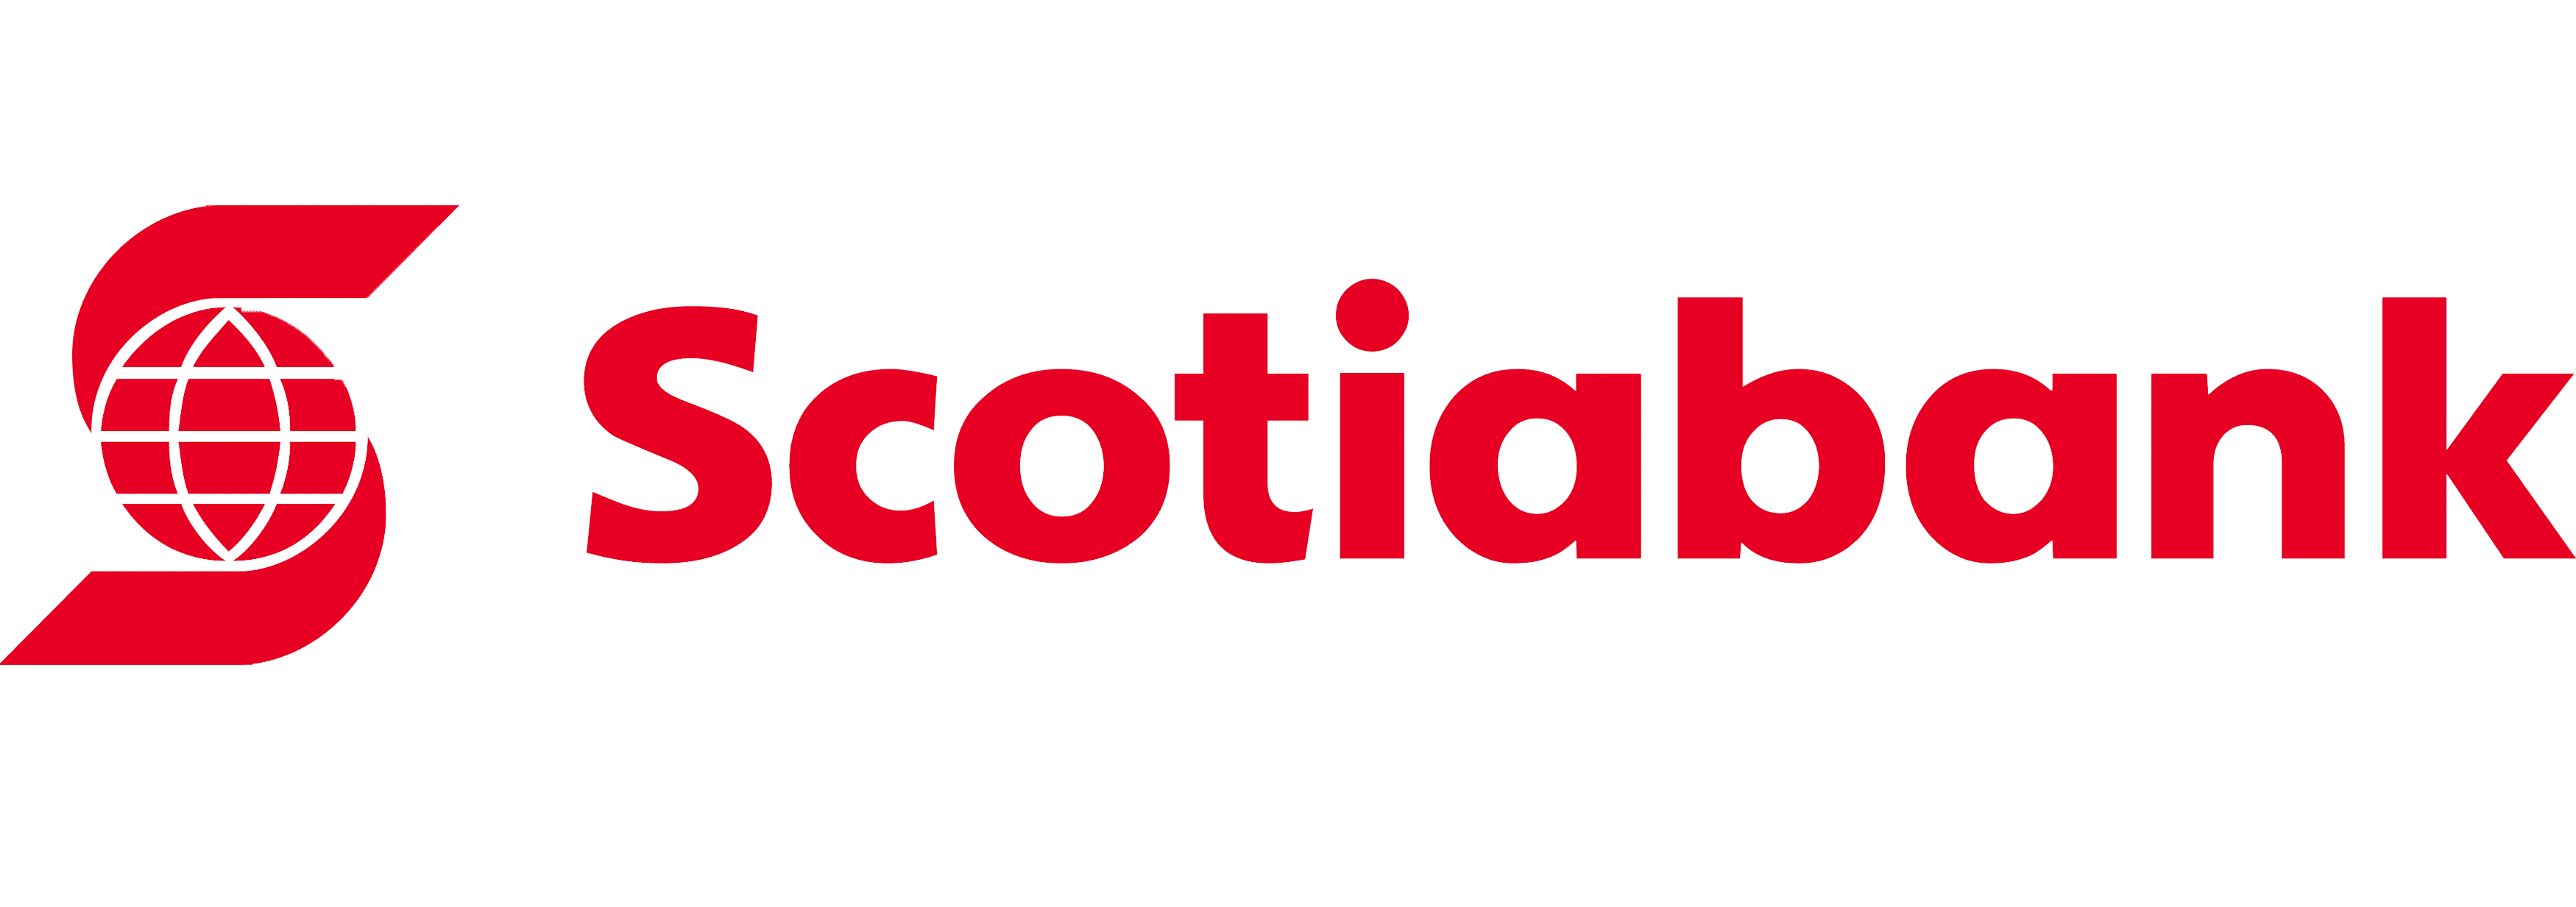 Scotiabank-Logo-PNG-03791-1.png